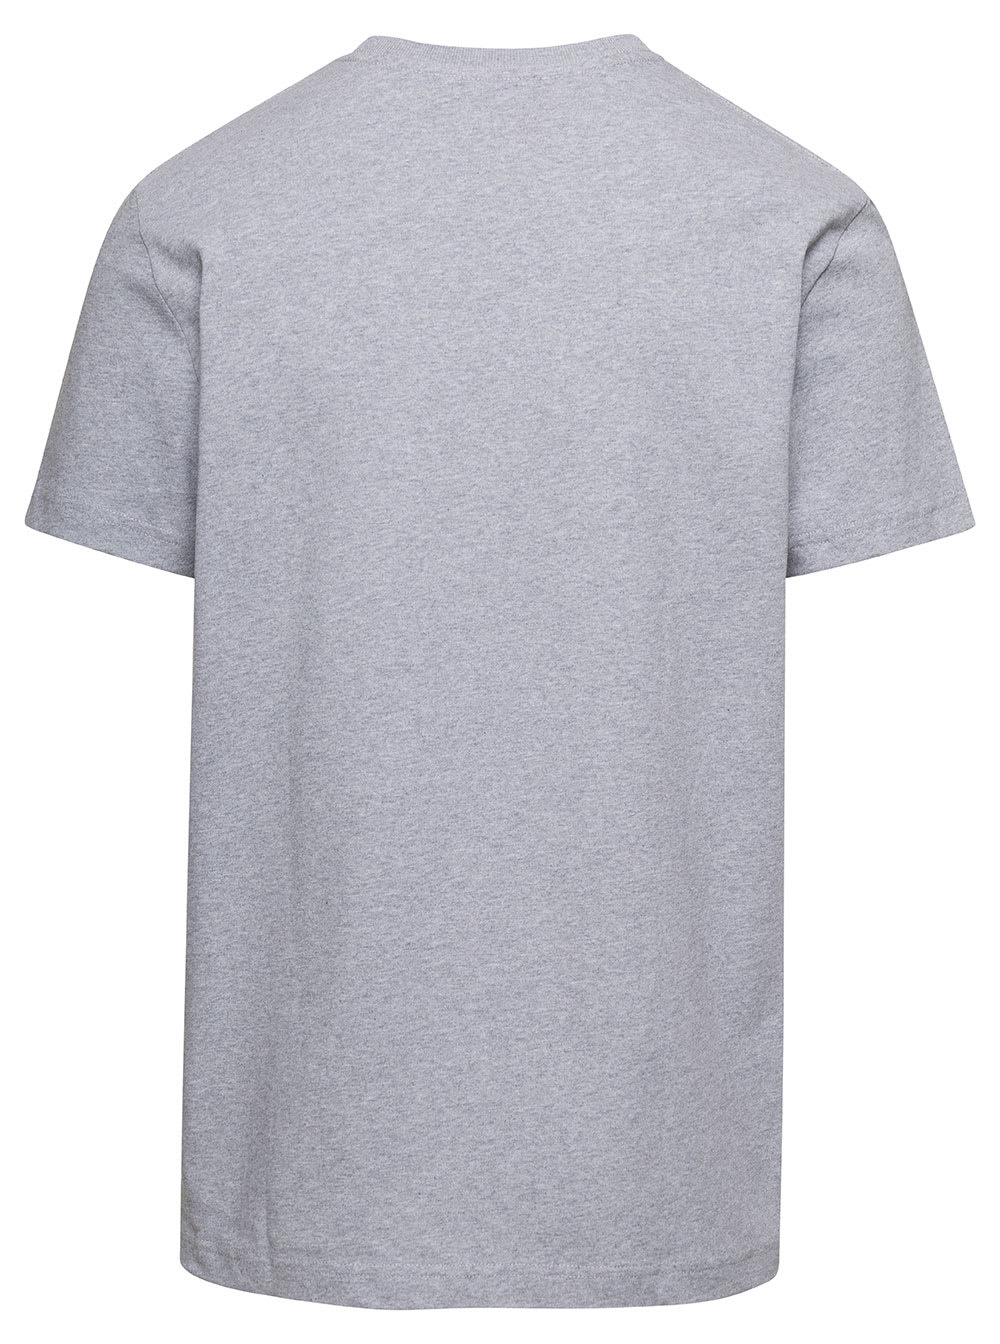 Shop Apc Anchor Grey Crewneck T-shirt With X J.w. Anderson Print In Cotton Blend Man